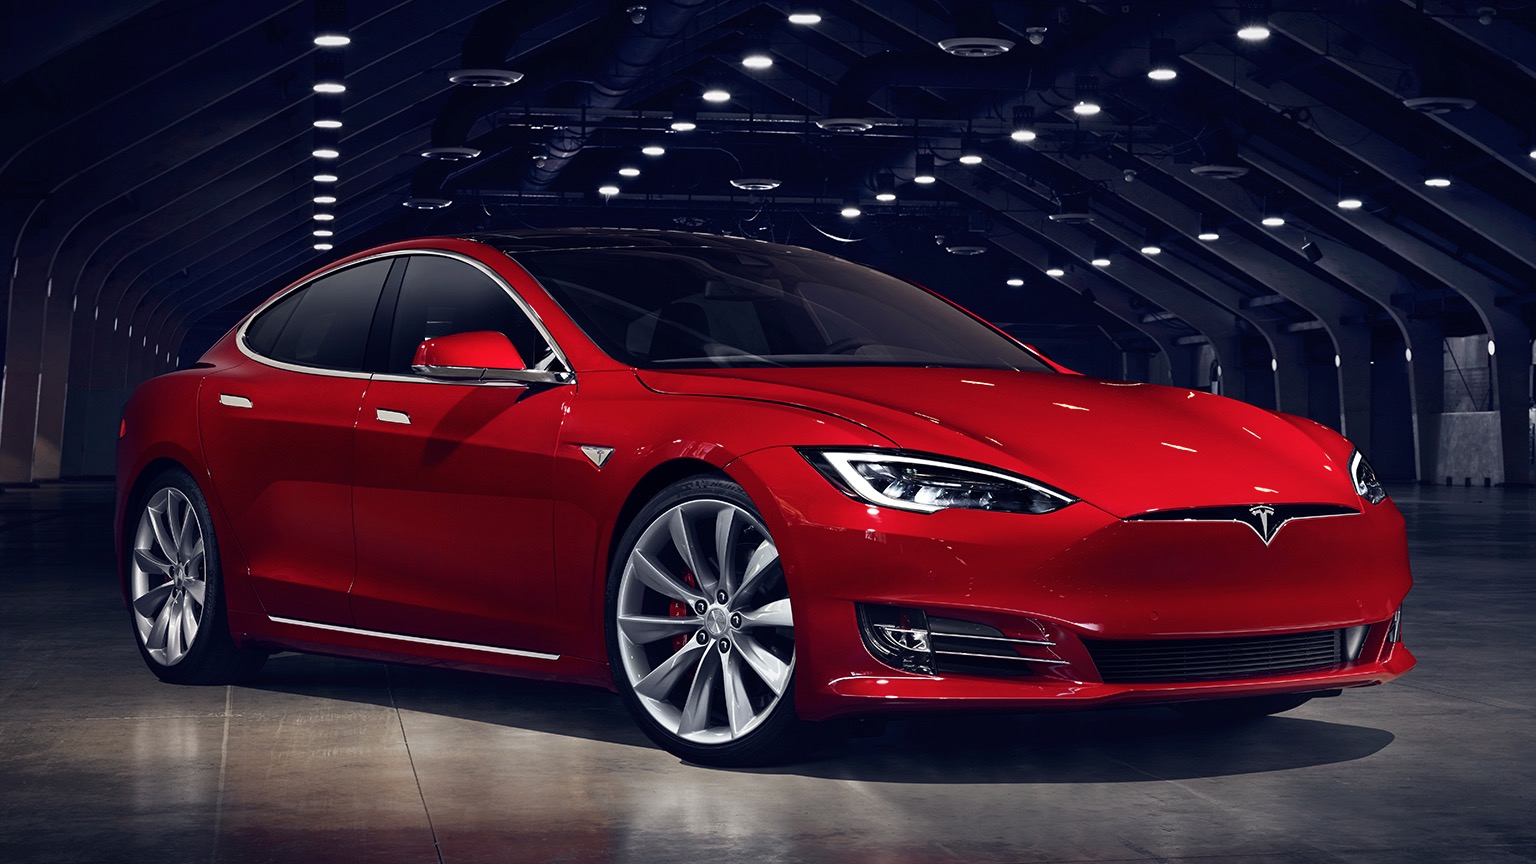 Baron Wanten Laan Tesla Model S 75D (2016-2019) price and specifications - EV Database